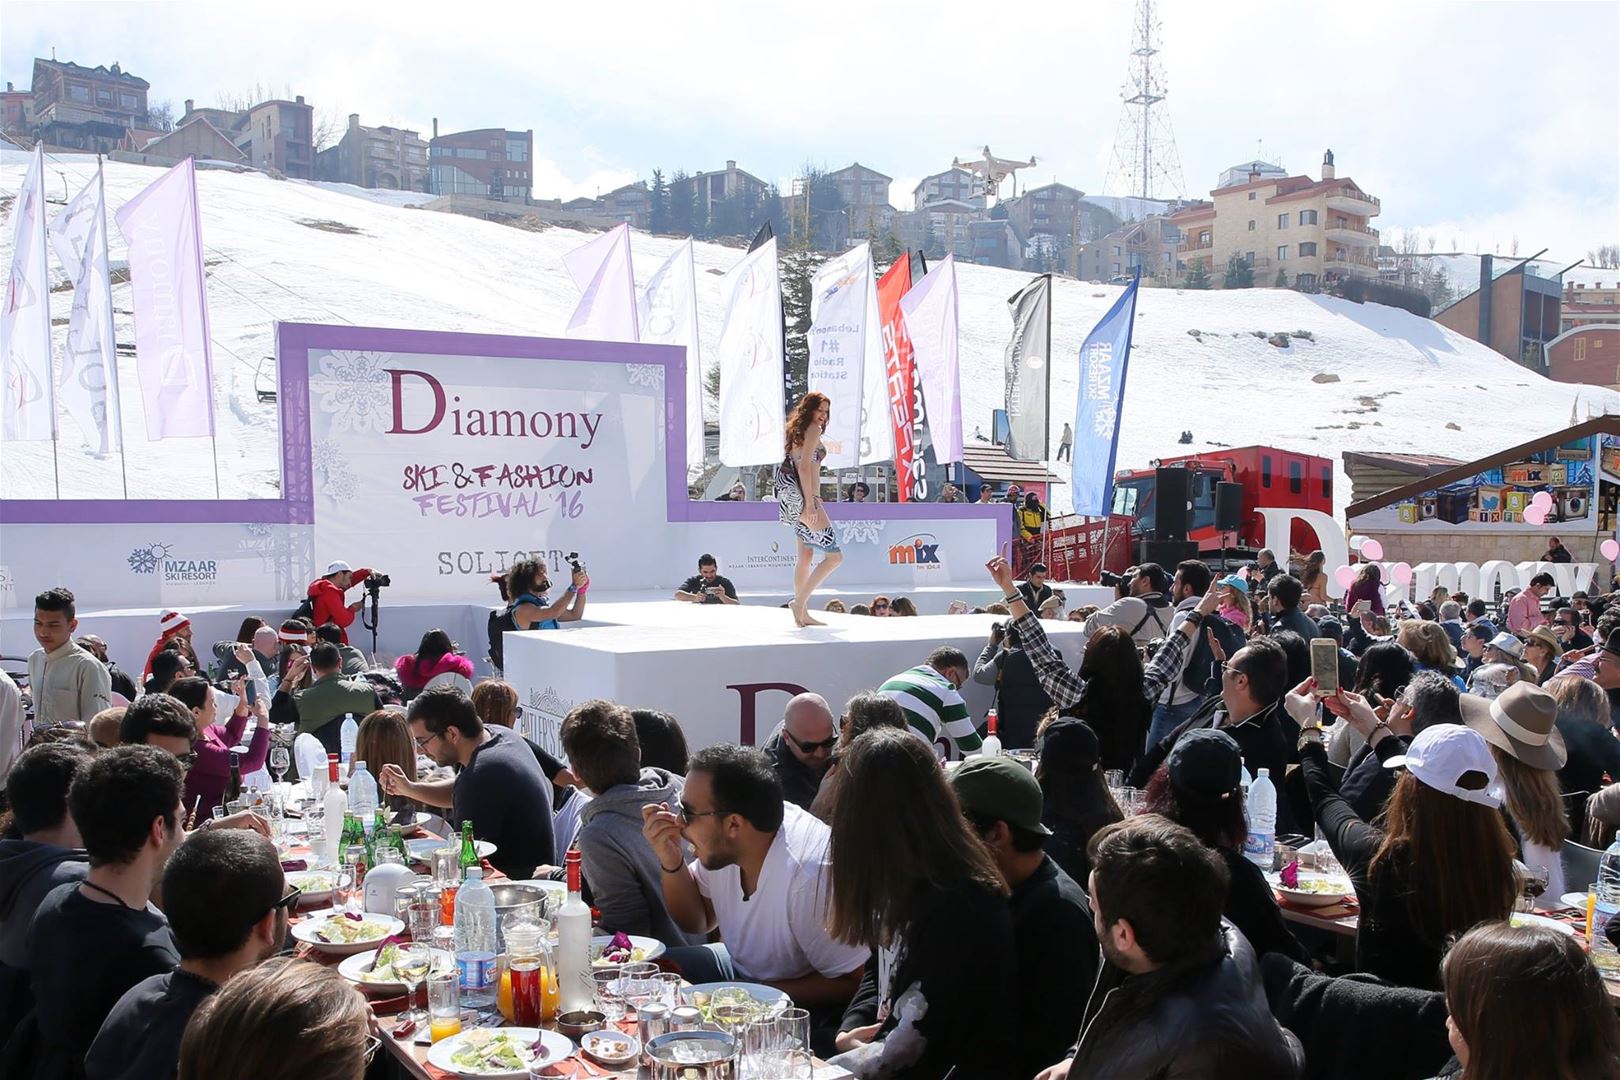 Diamony Lingerie Fashion Show 2016 at InterContinental Mzaar Lebanon Mountain Resort & Spa.